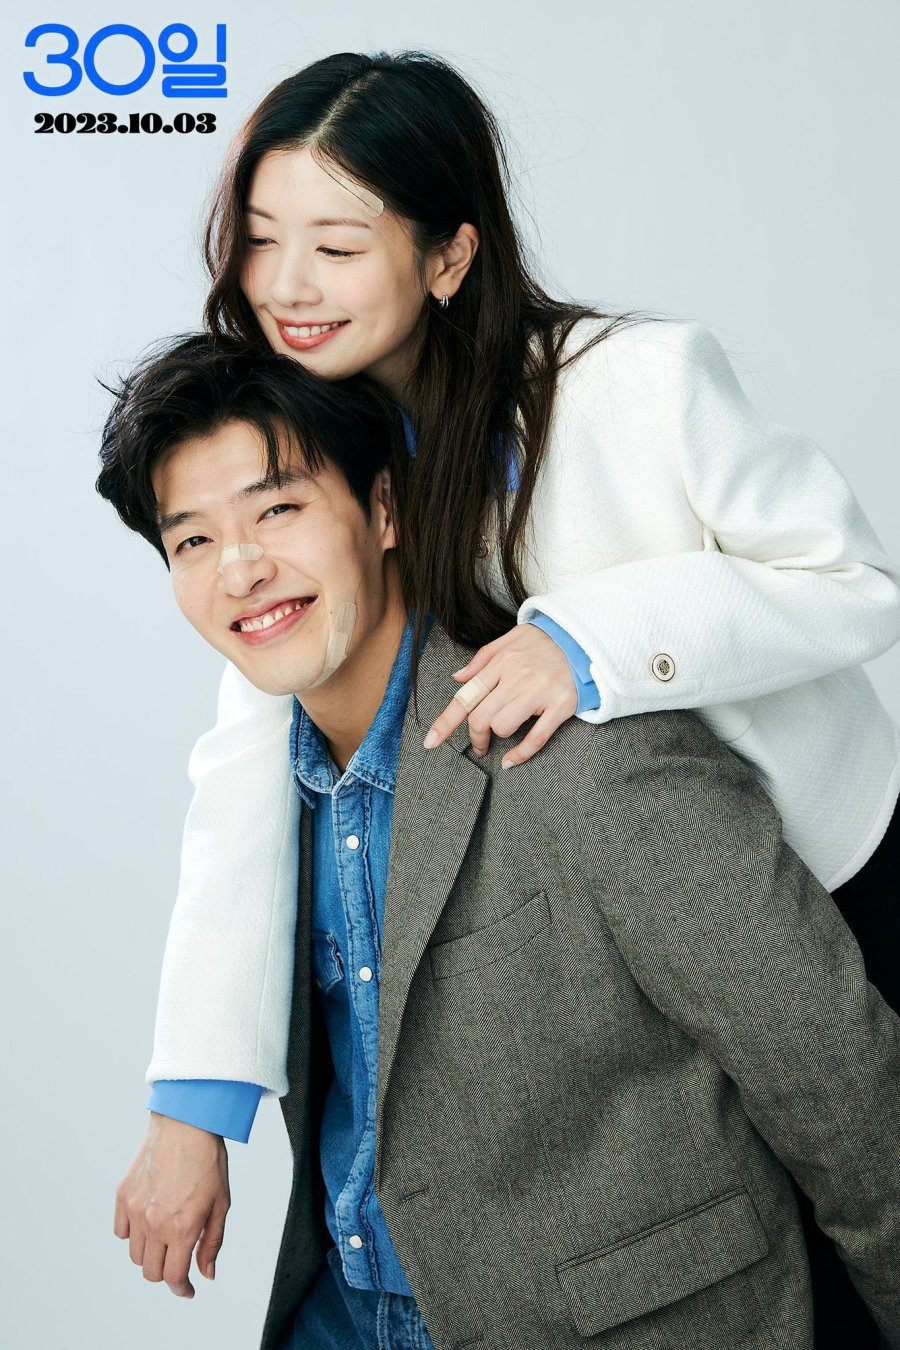 Kang Ha Neul and Jung So Min's heartfelt romance 'Love Reset' to